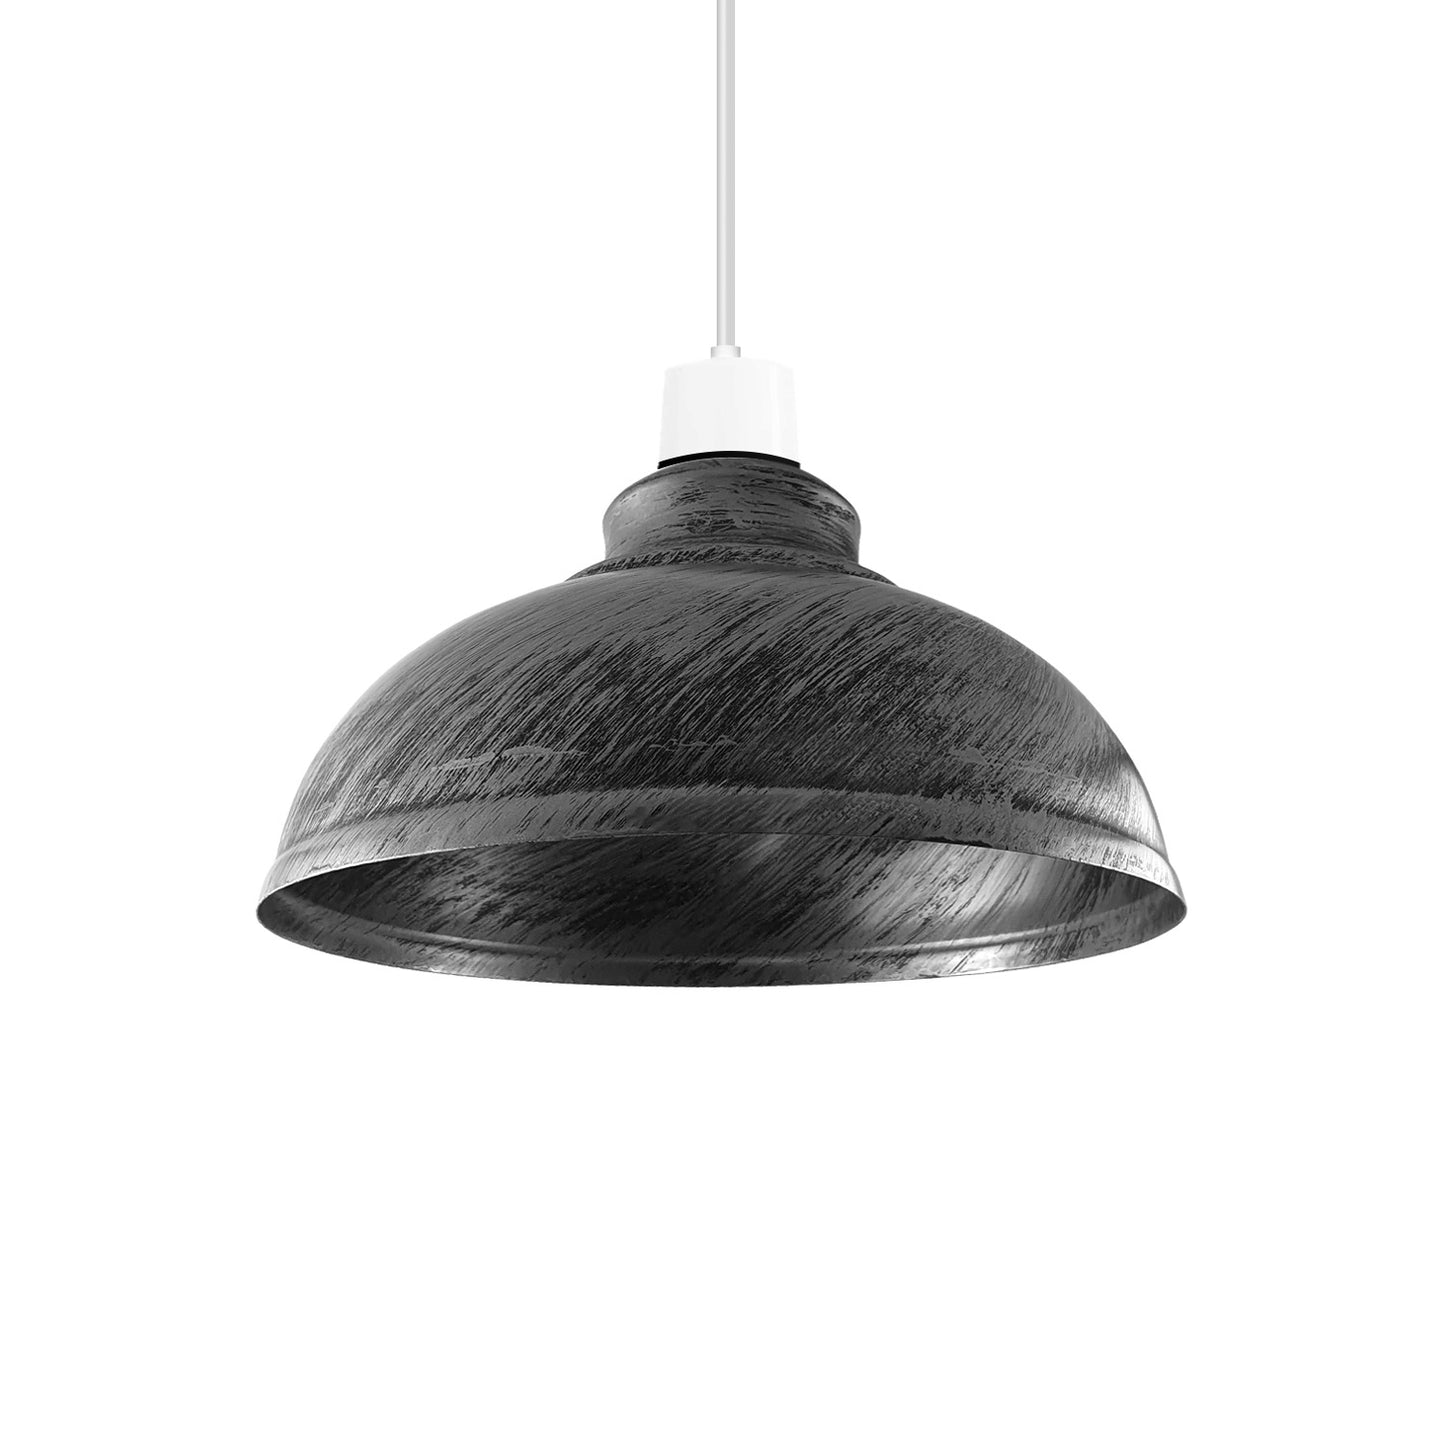 Modern Vintage Dome Metal Ceiling Hanging Pendant Lamp Shade~1690